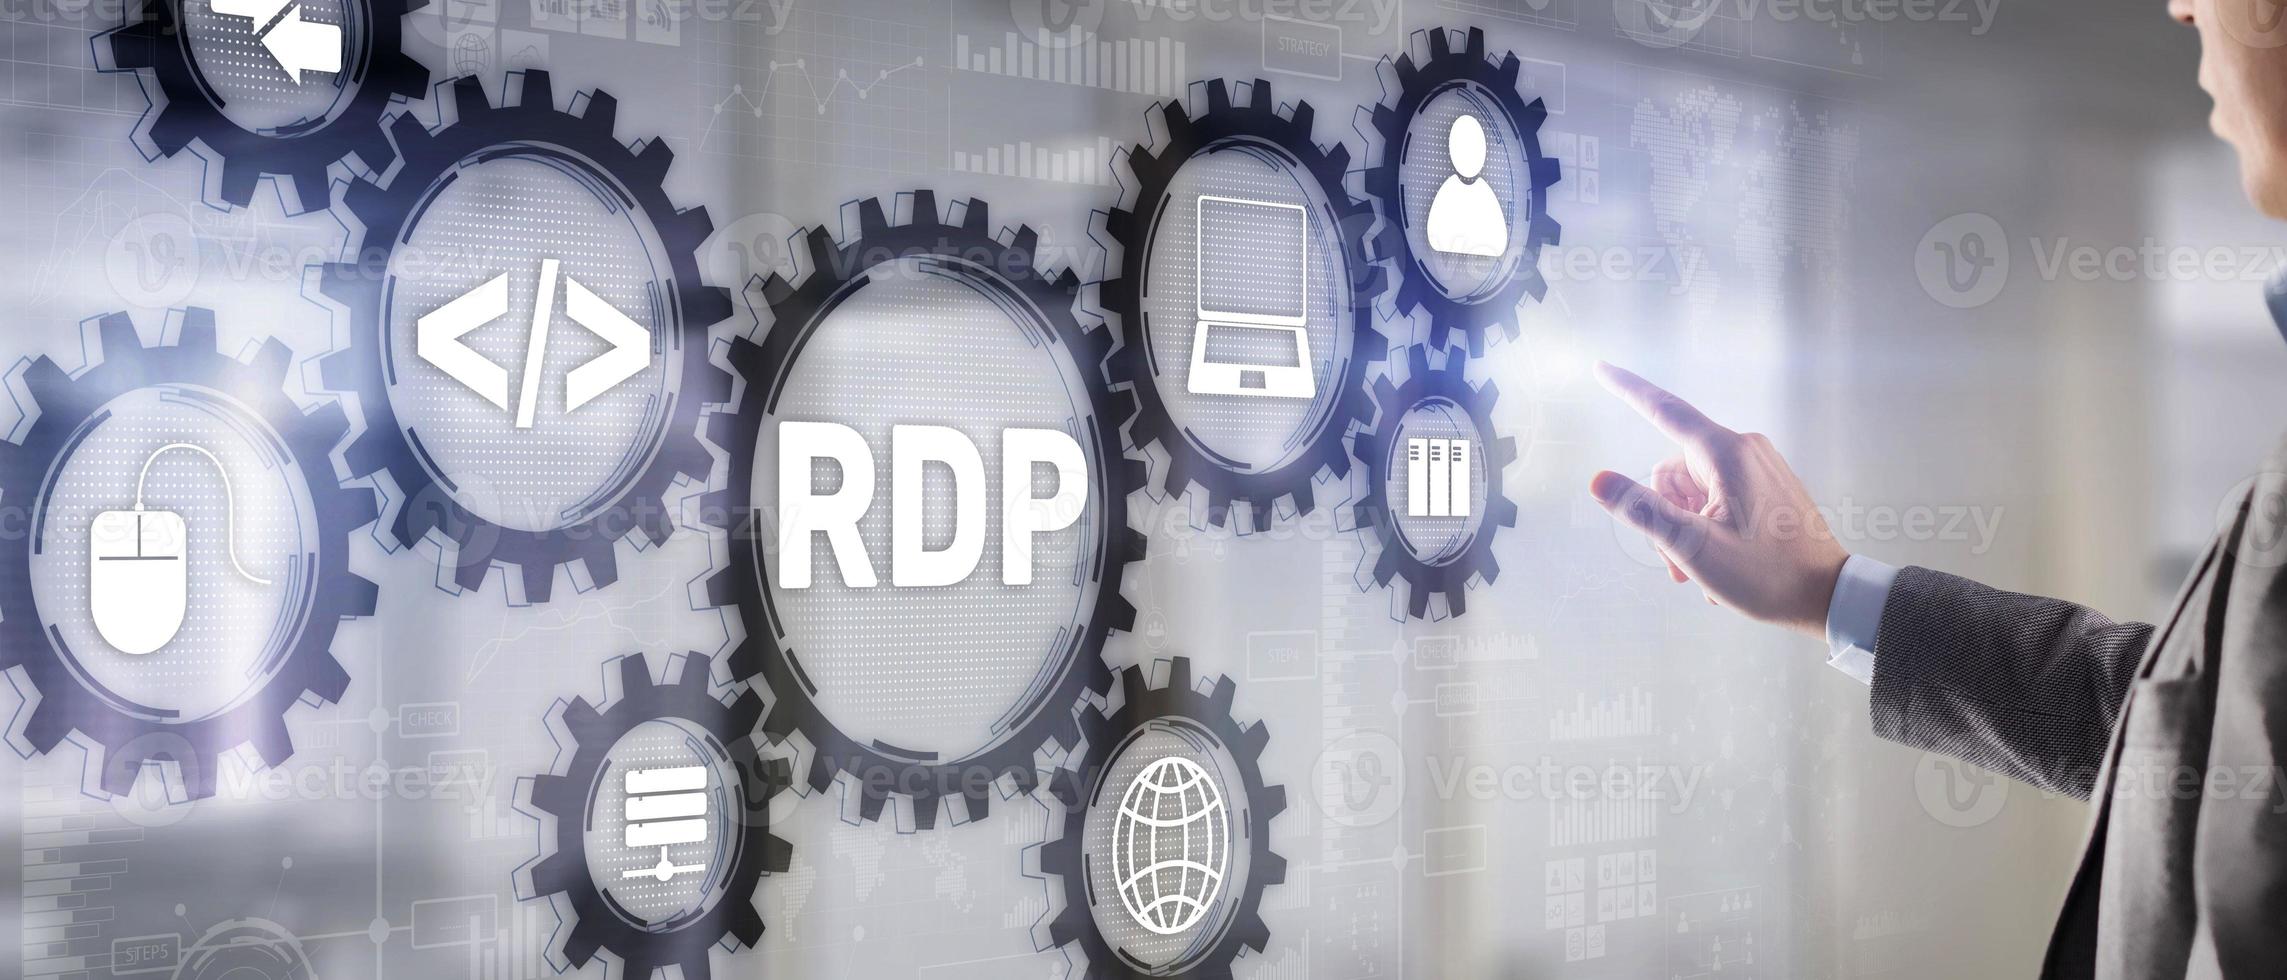 RDP Remote Desktop Protocol. Terminal Services photo